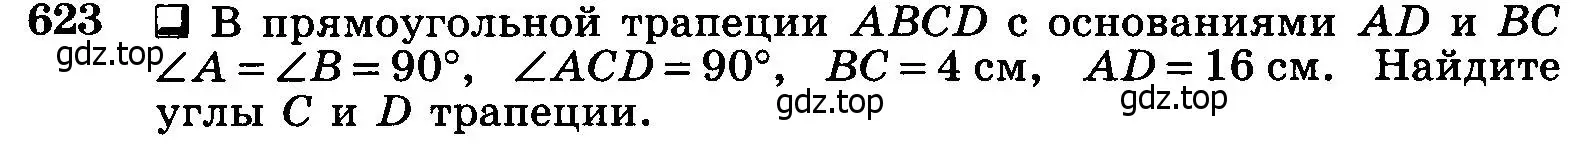 Условие номер 623 (страница 161) гдз по геометрии 7-9 класс Атанасян, Бутузов, учебник